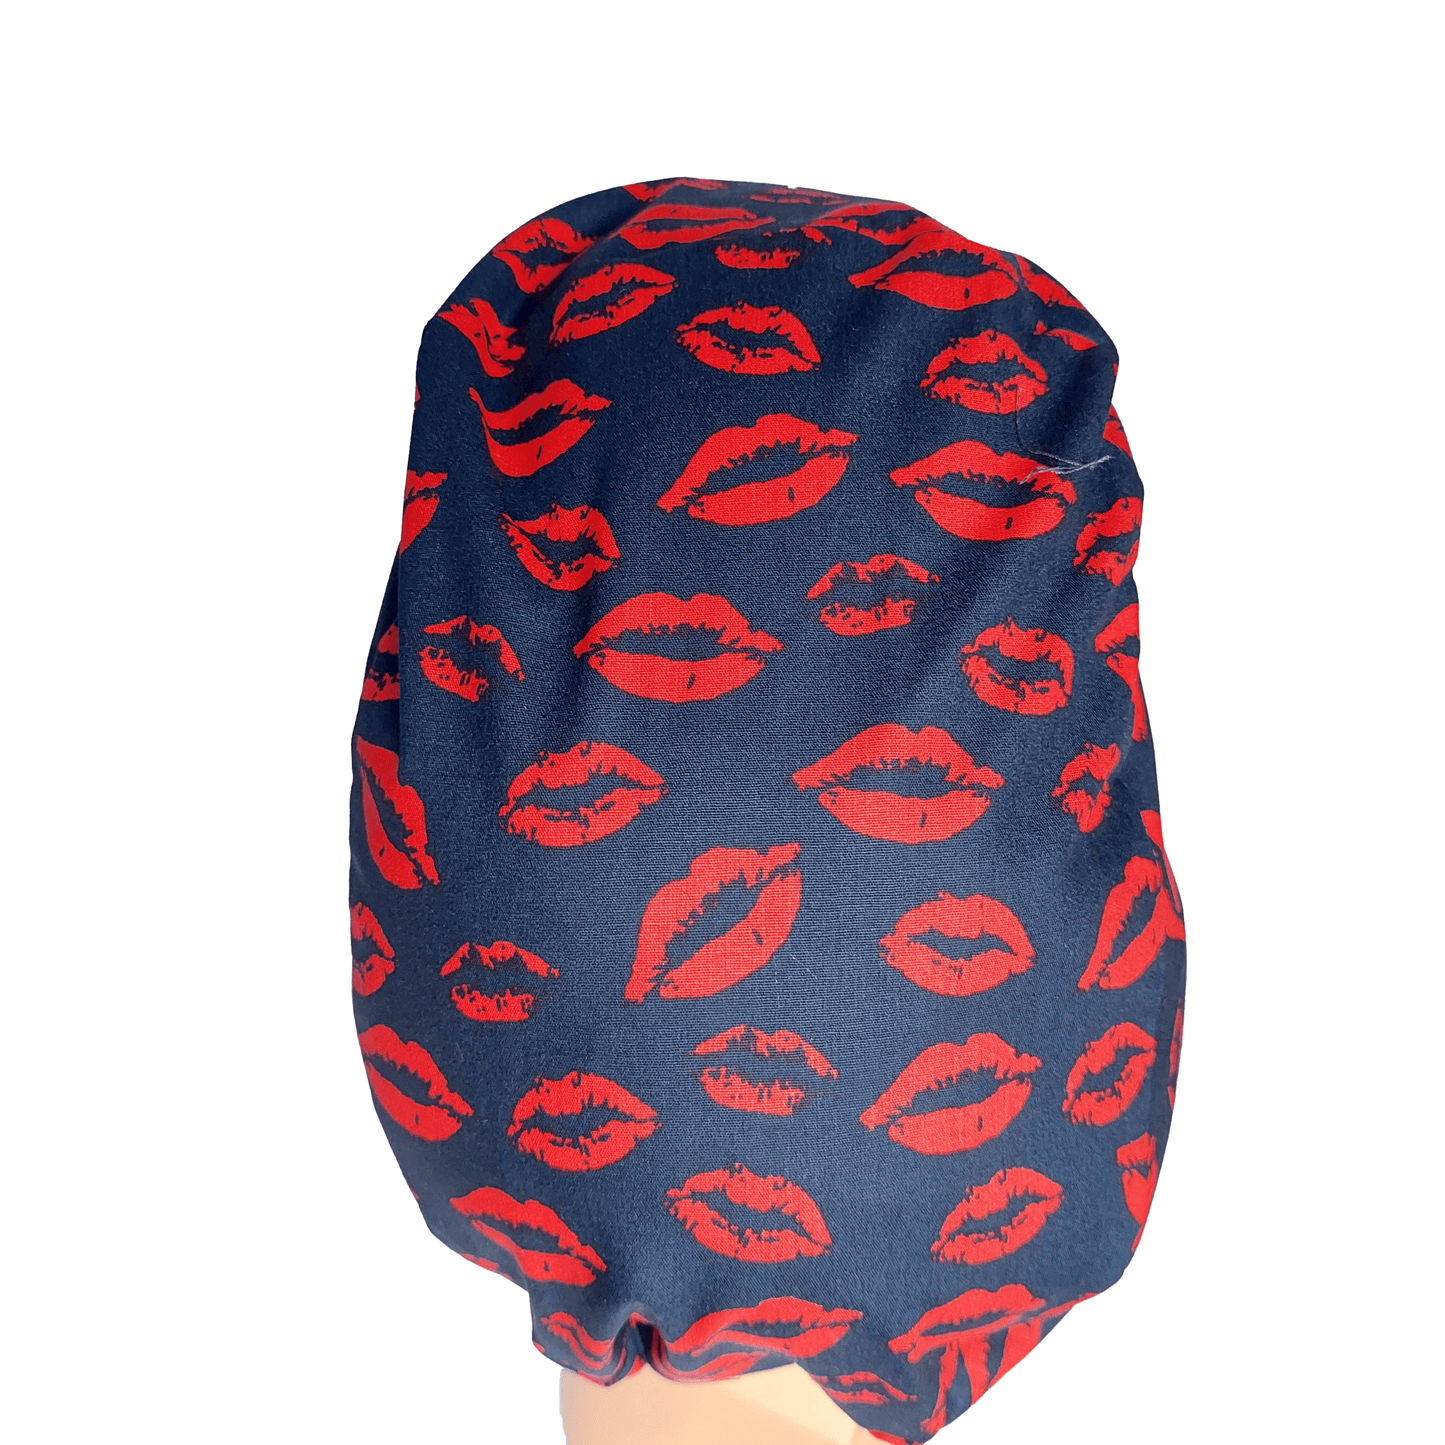 Scrub Cap -Surgical Cap Red Kiss - [scrub_hat]-[scrub_cap_for_women]-[surgical_cap]